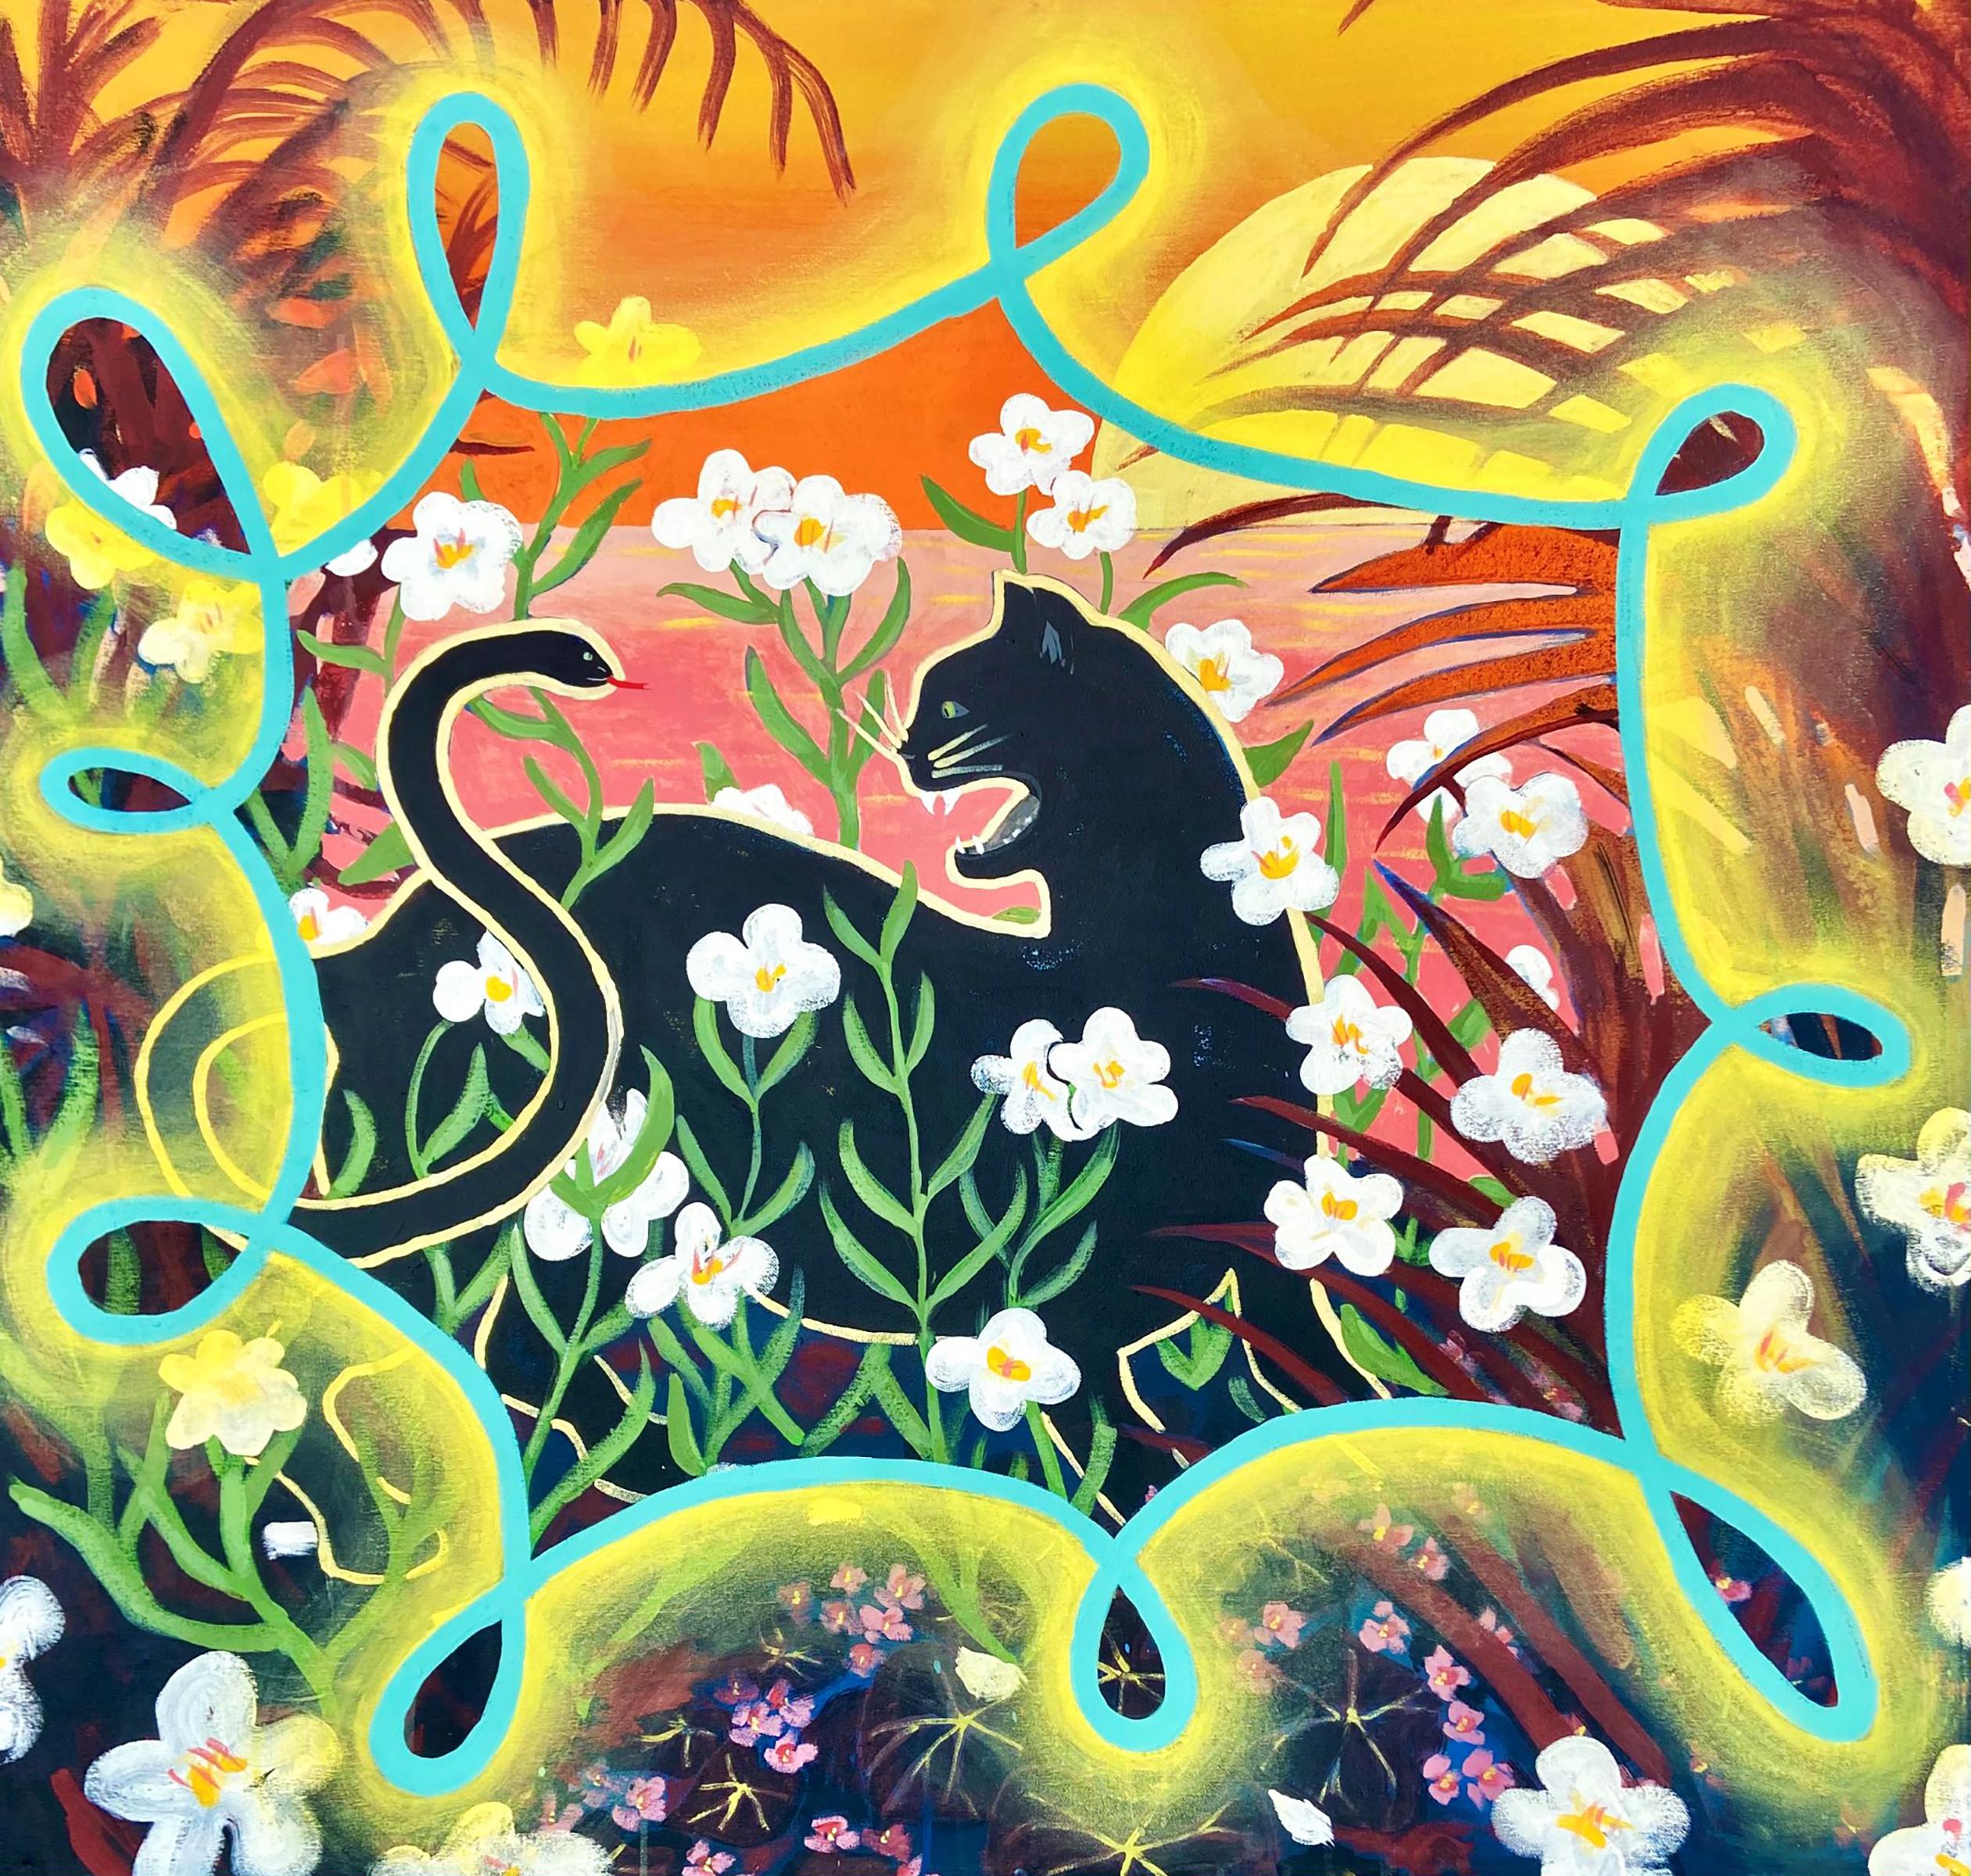 Shelby Little Figurative Painting - 'Ego' - floral - sun - fauvism - colorful - black cat - Greek mythology - snakes